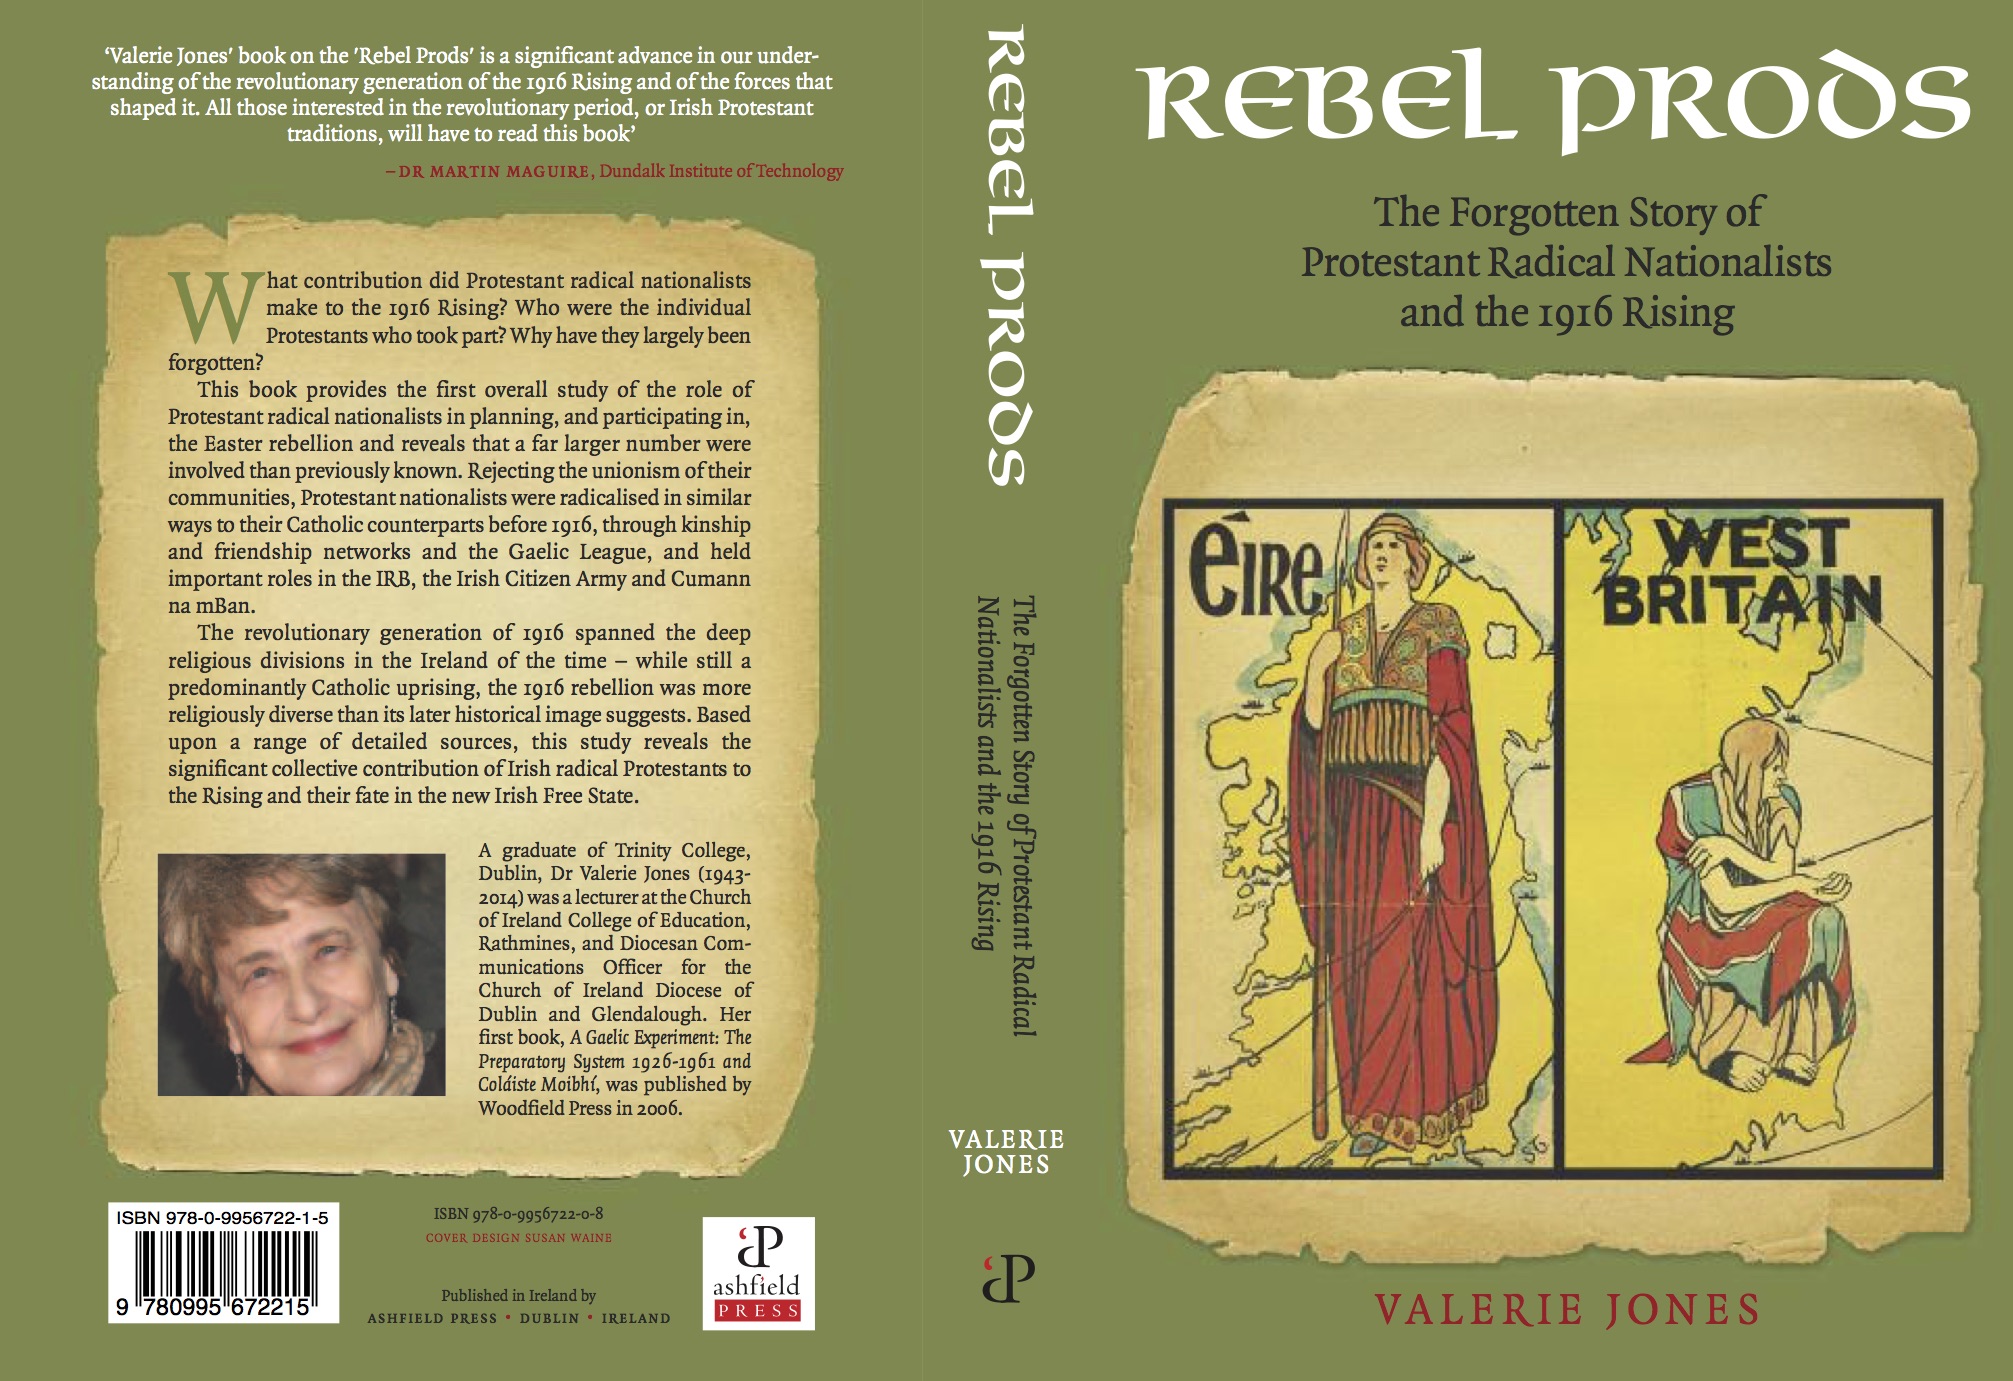 book-cover-rebel-prods-final